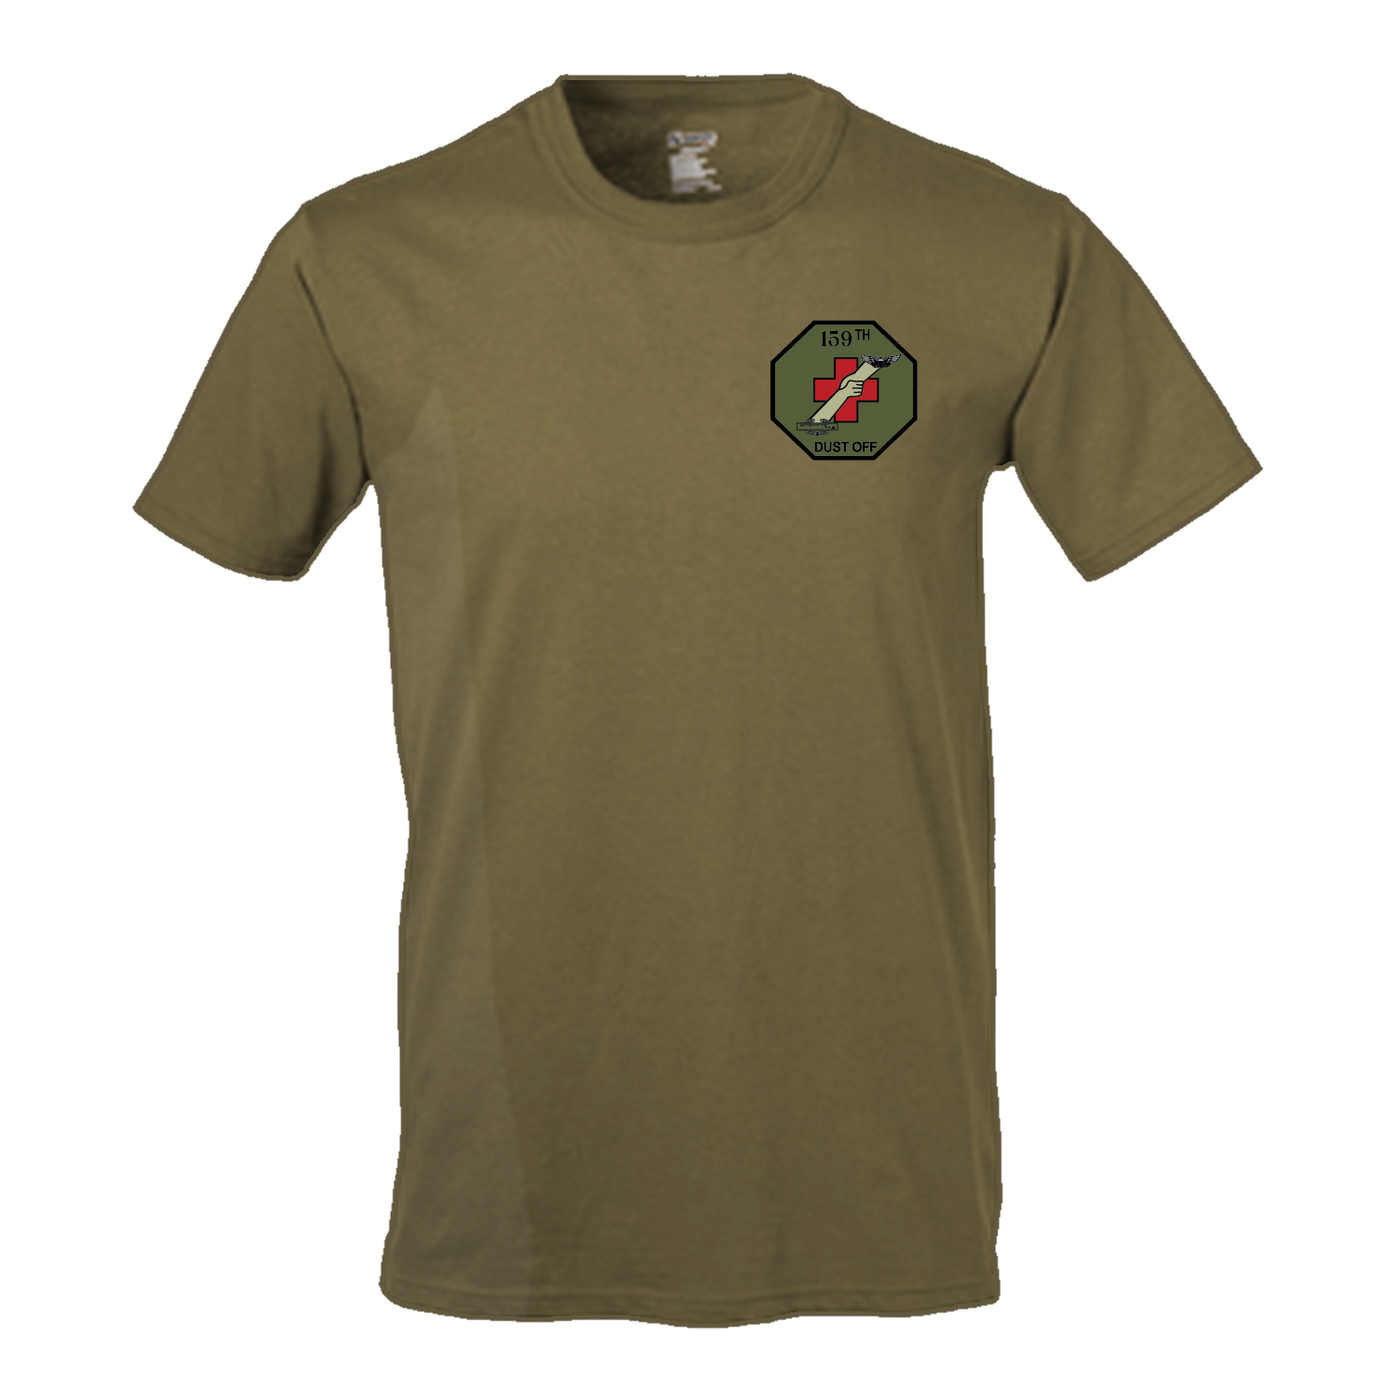 159th Dustoff Flight Approved T-Shirt